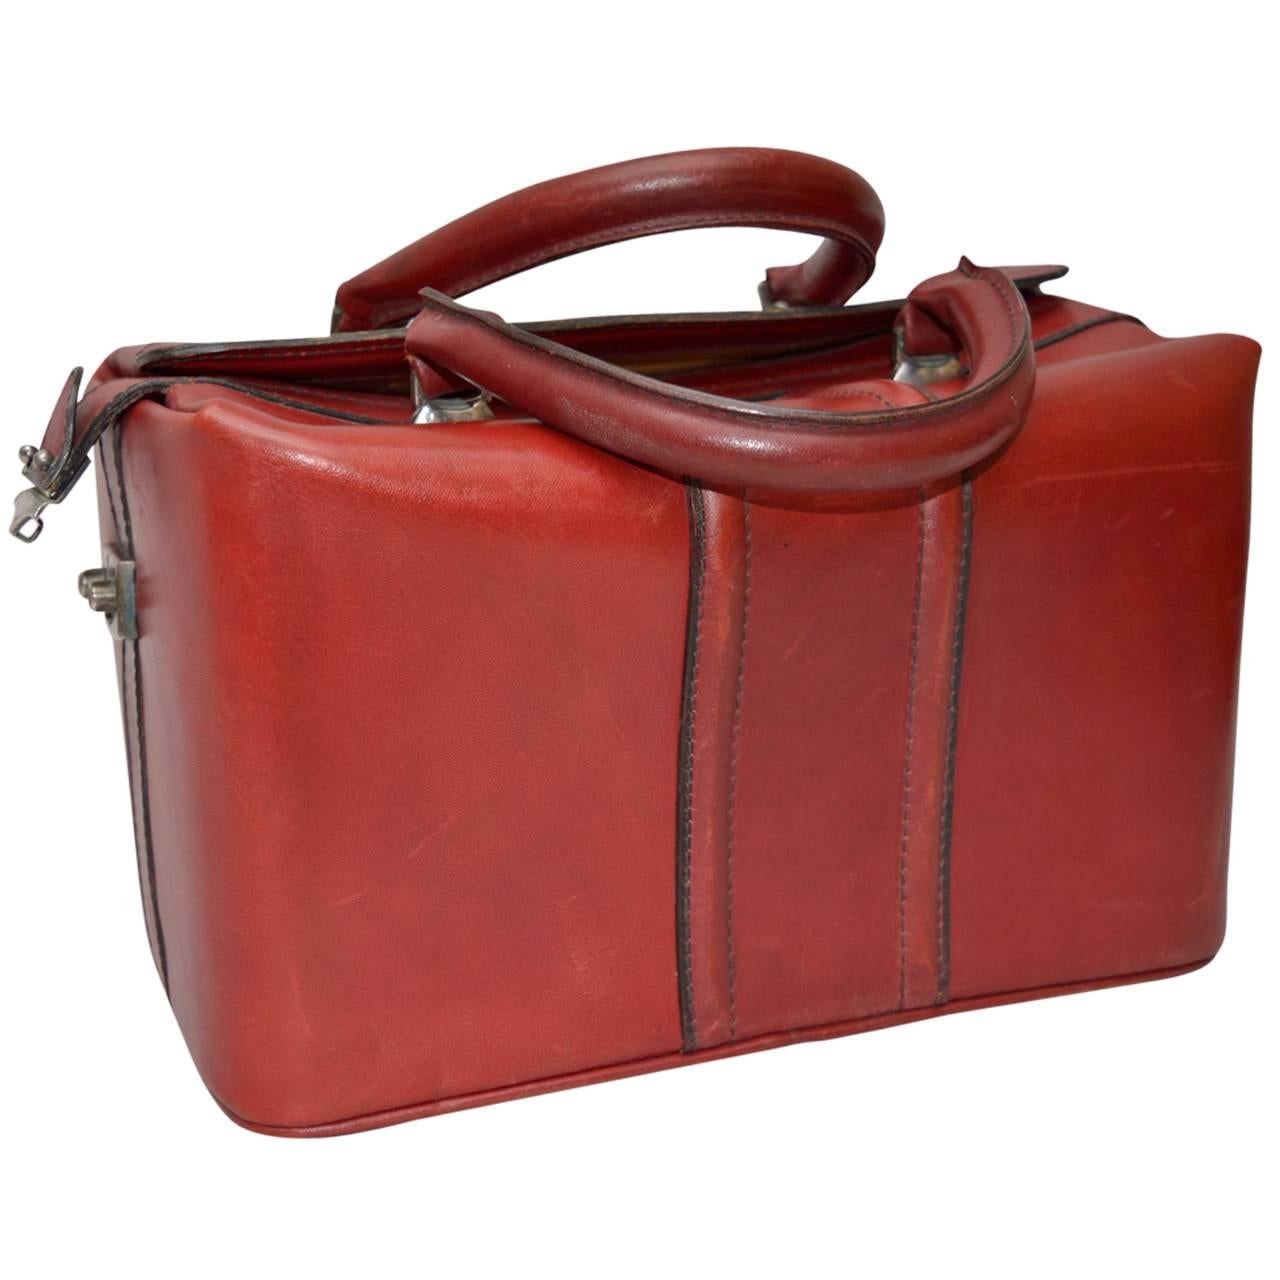 Vintage Italian Red Leather Satchel or Doctors Bag